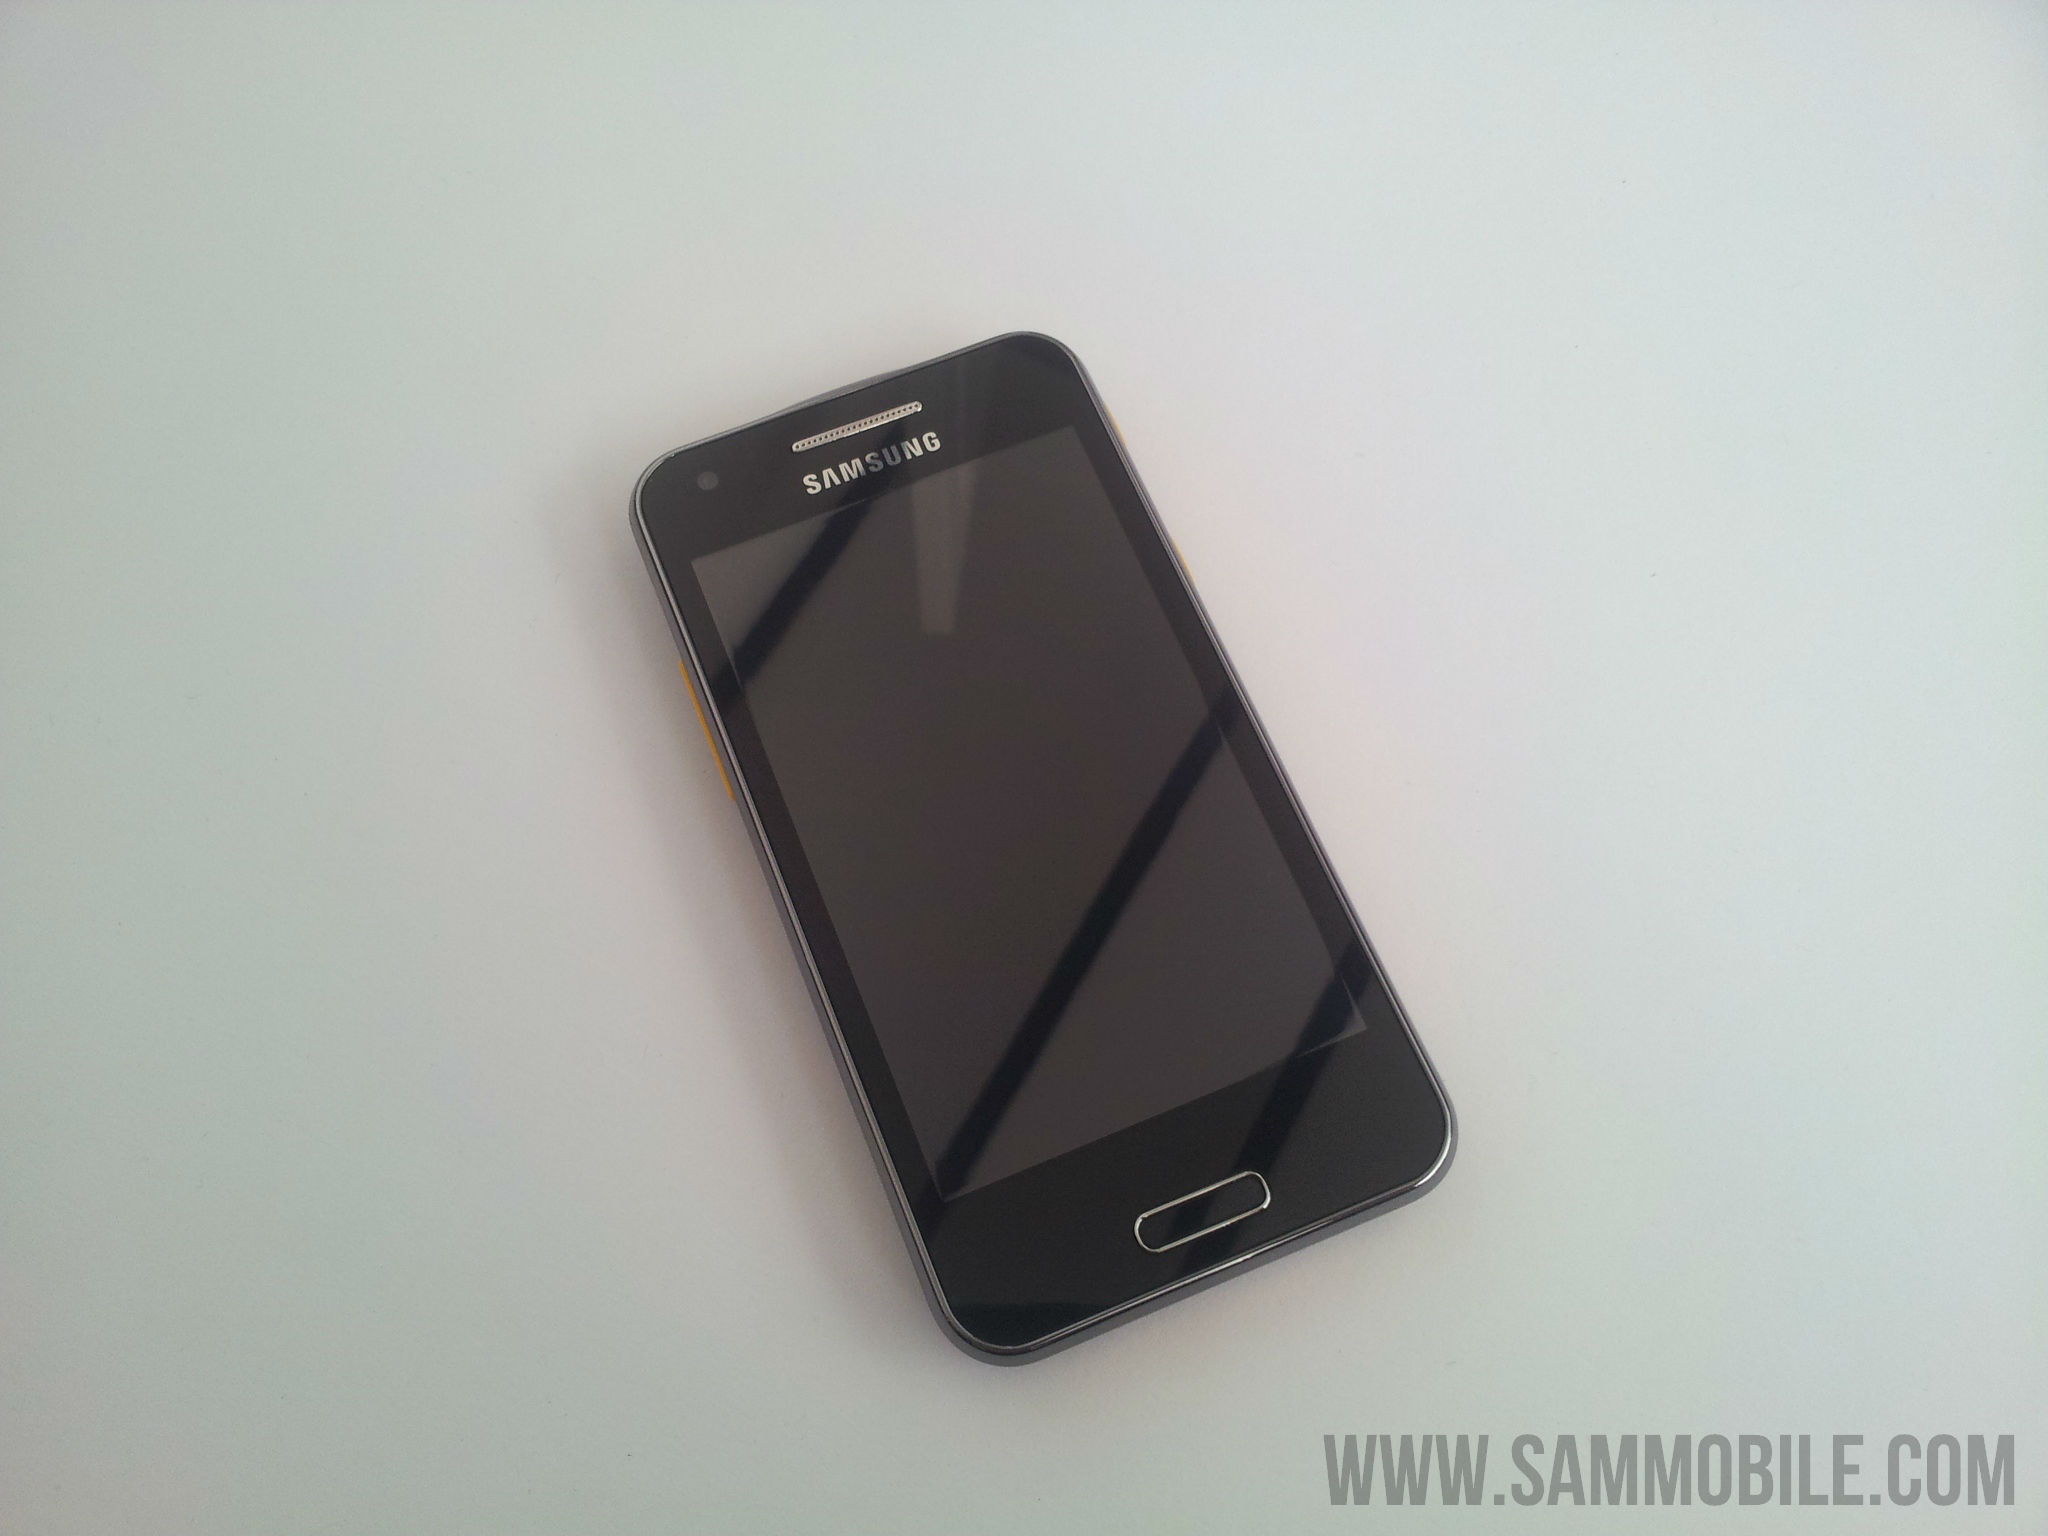 Samsung Galaxy Beam Smartphone Review